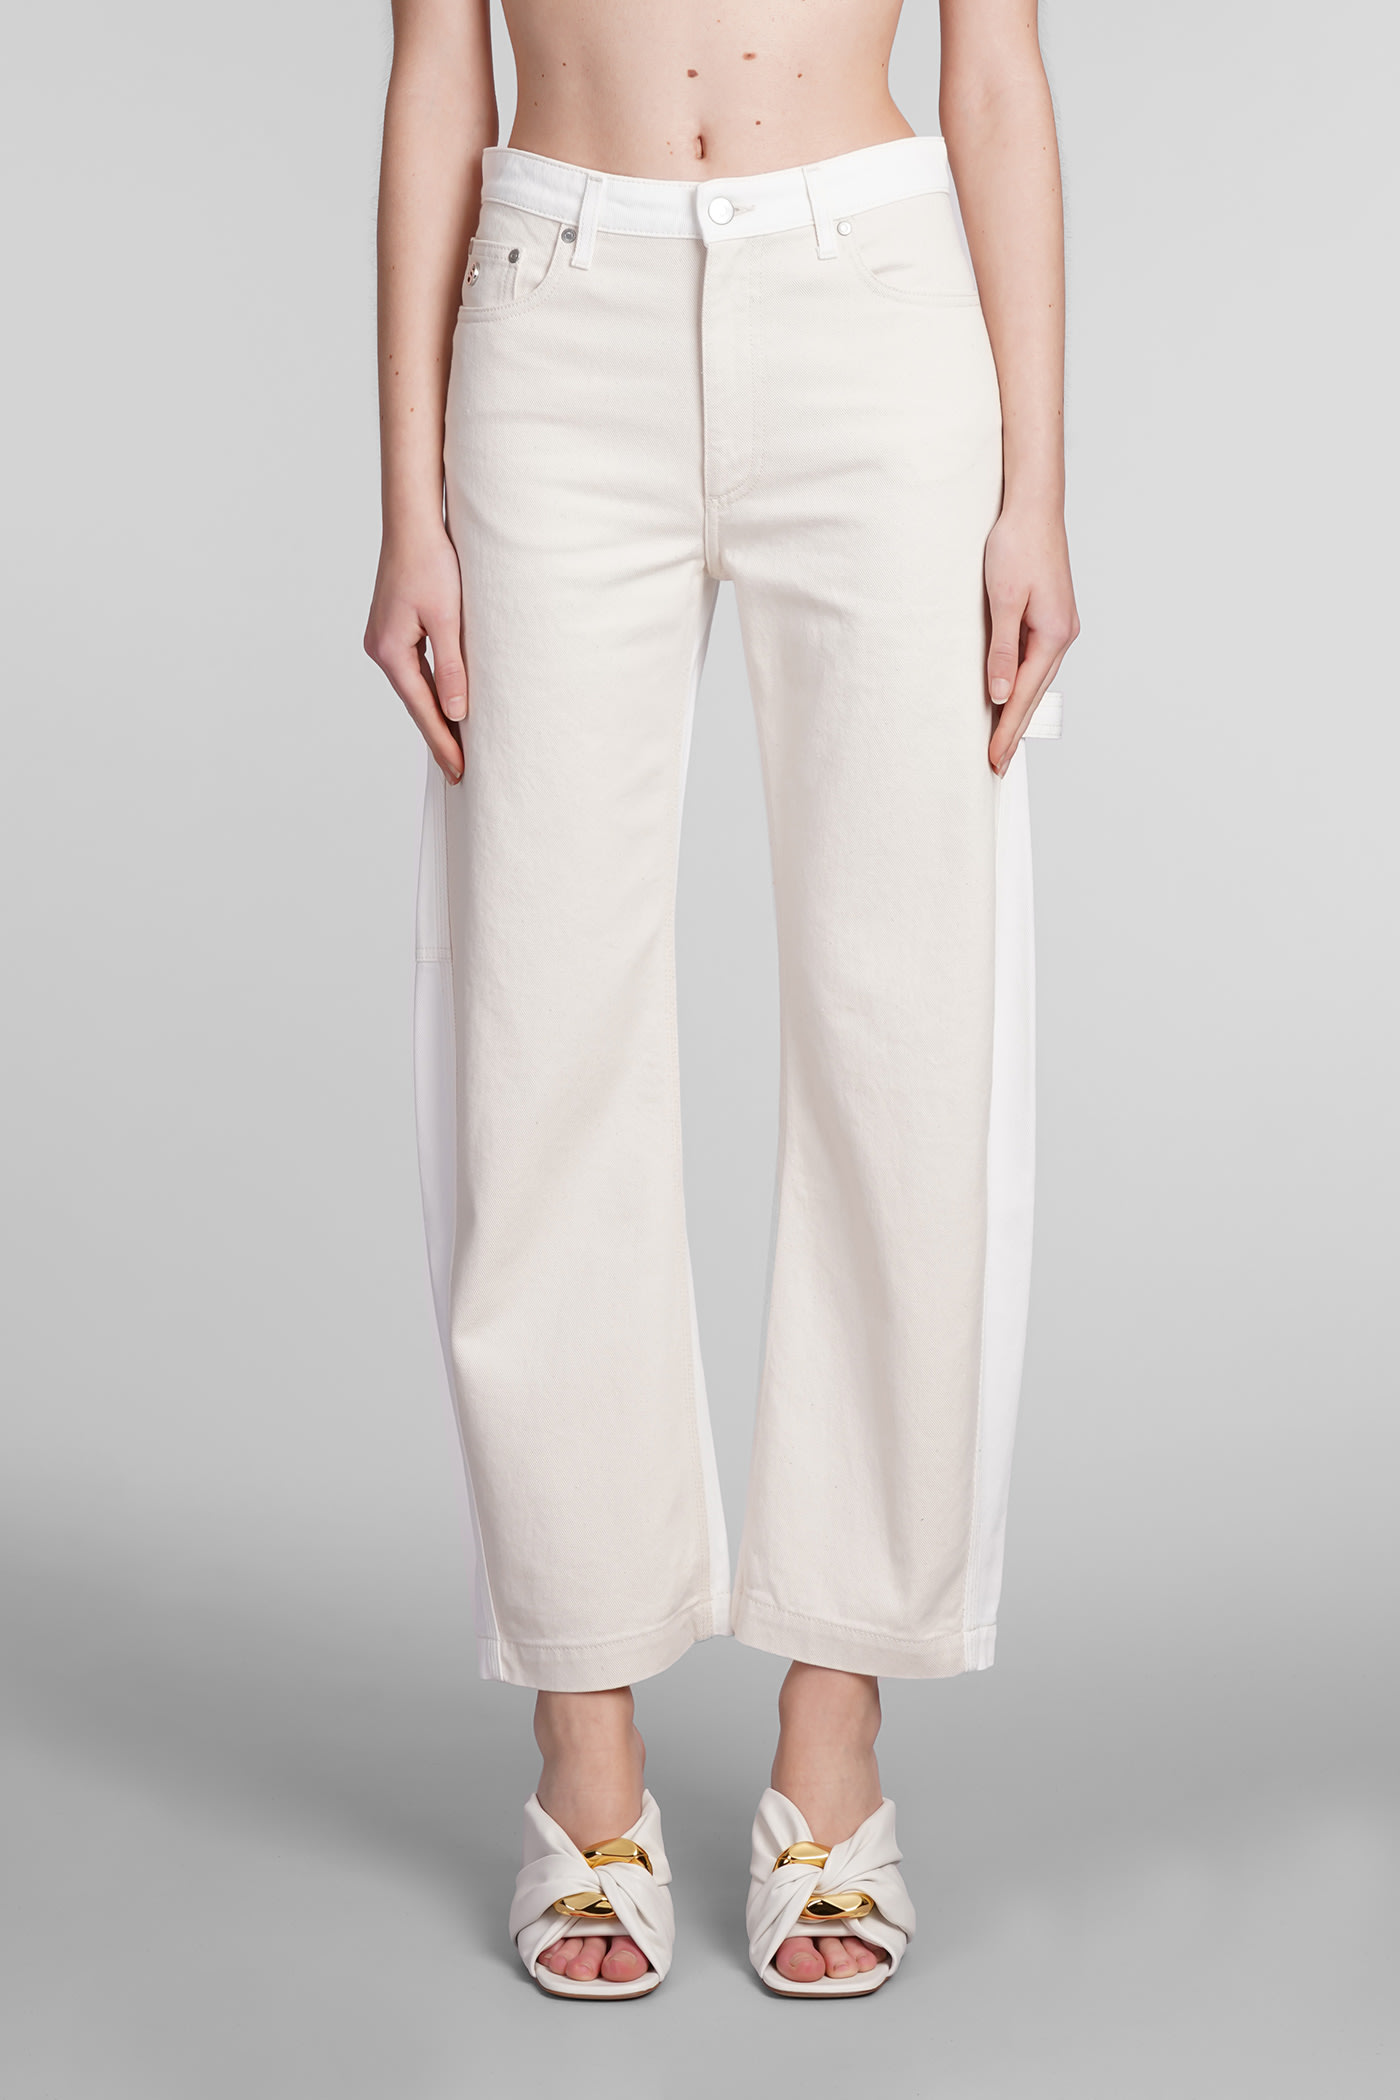 Stella Mccartney Jeans In White Denim